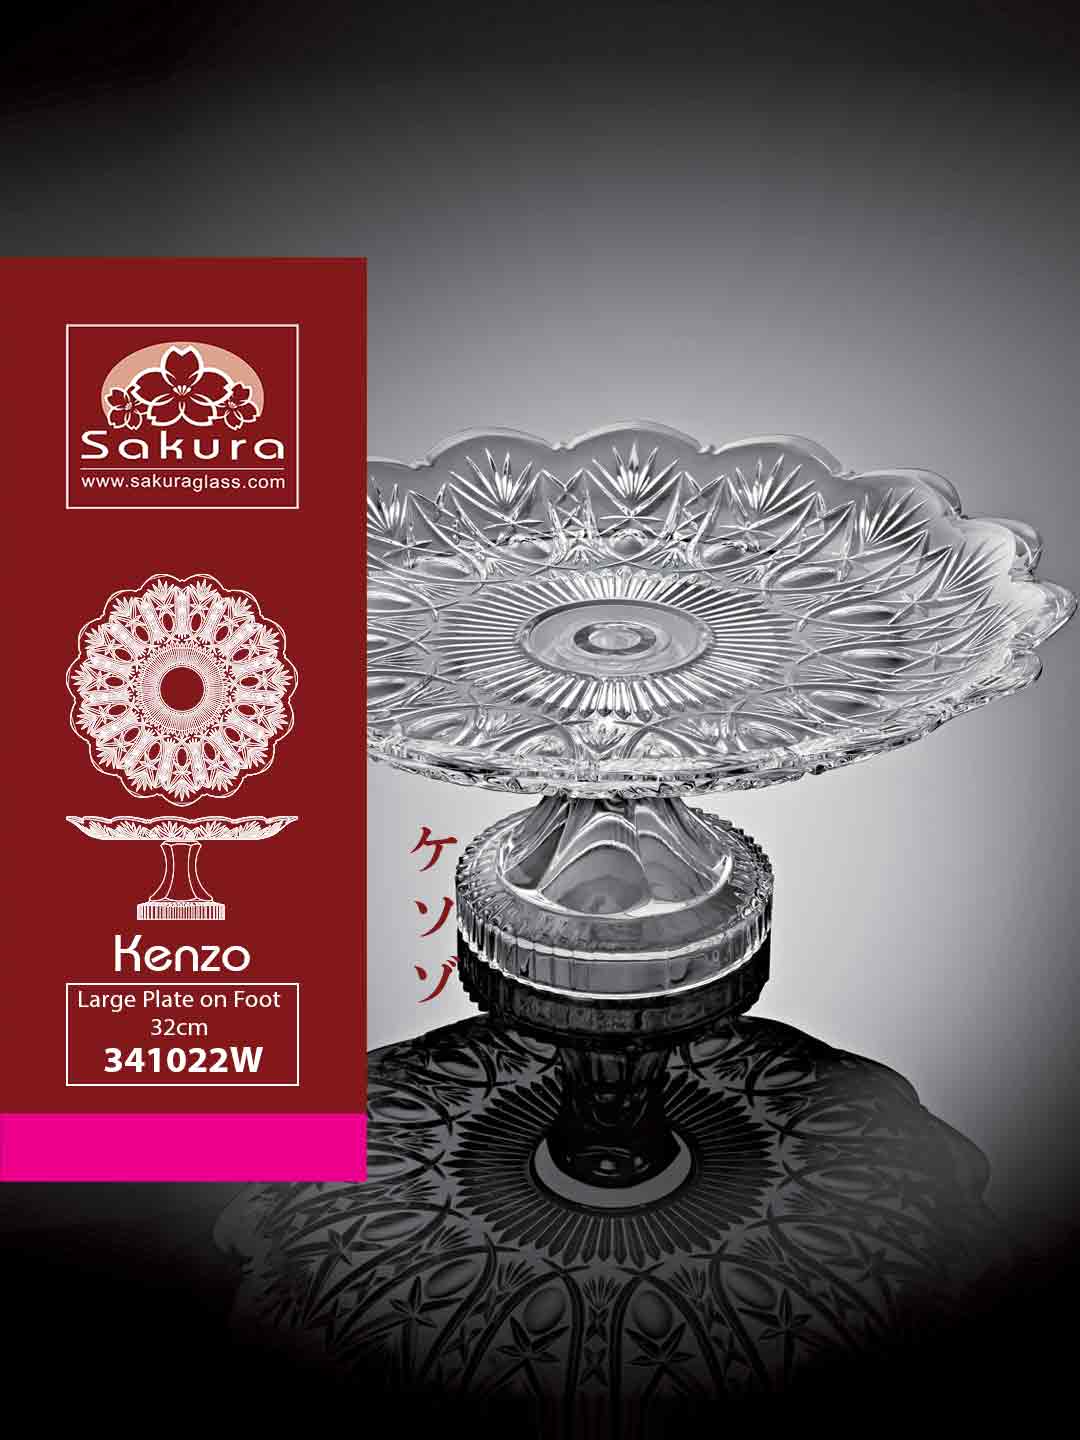 Sakura Product Kenzo Large Plate on Foot 32cm 341022W